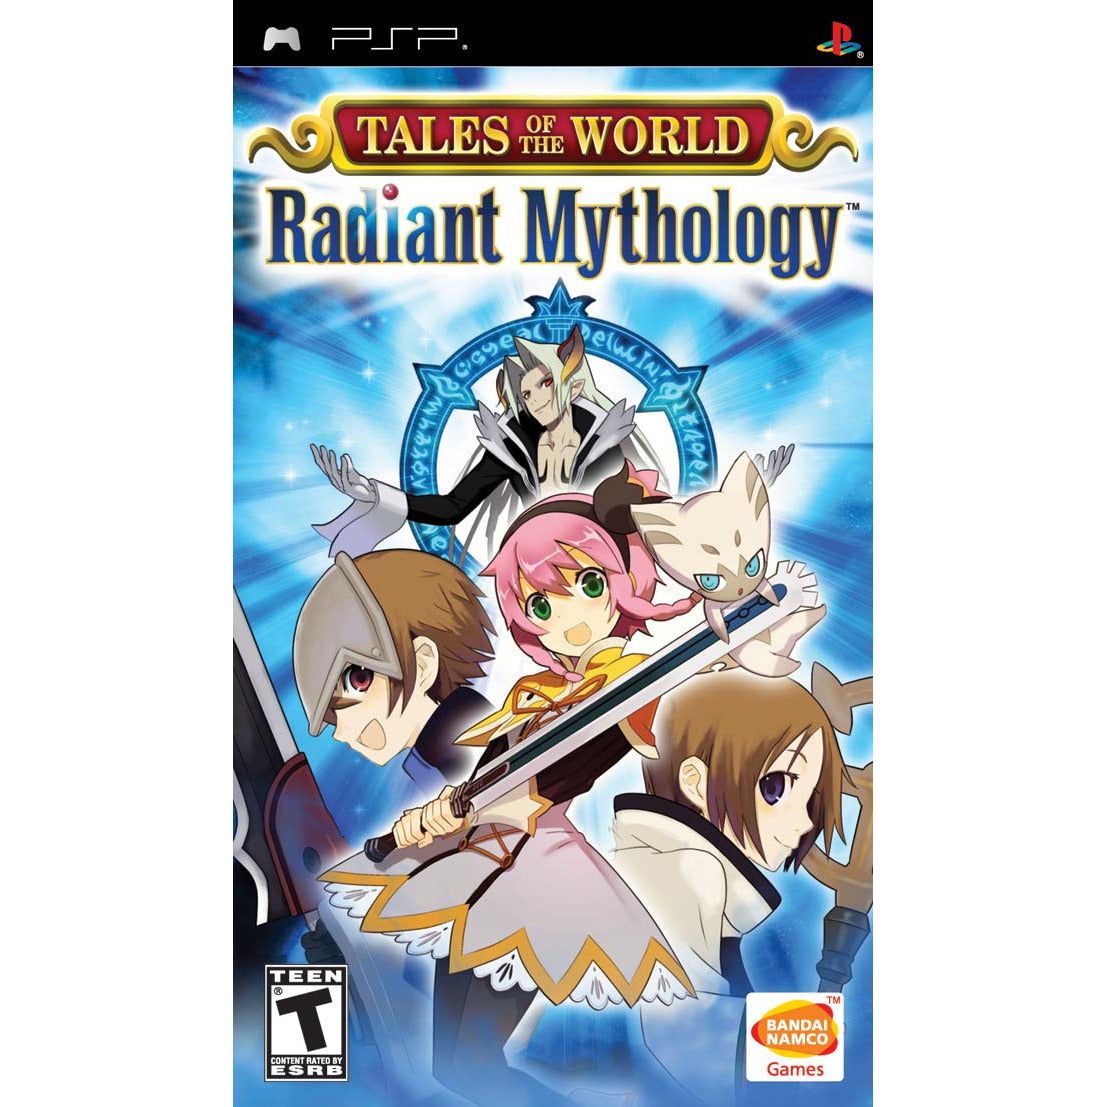 PSP - Tales of the World Radiant Mythology (In Case)